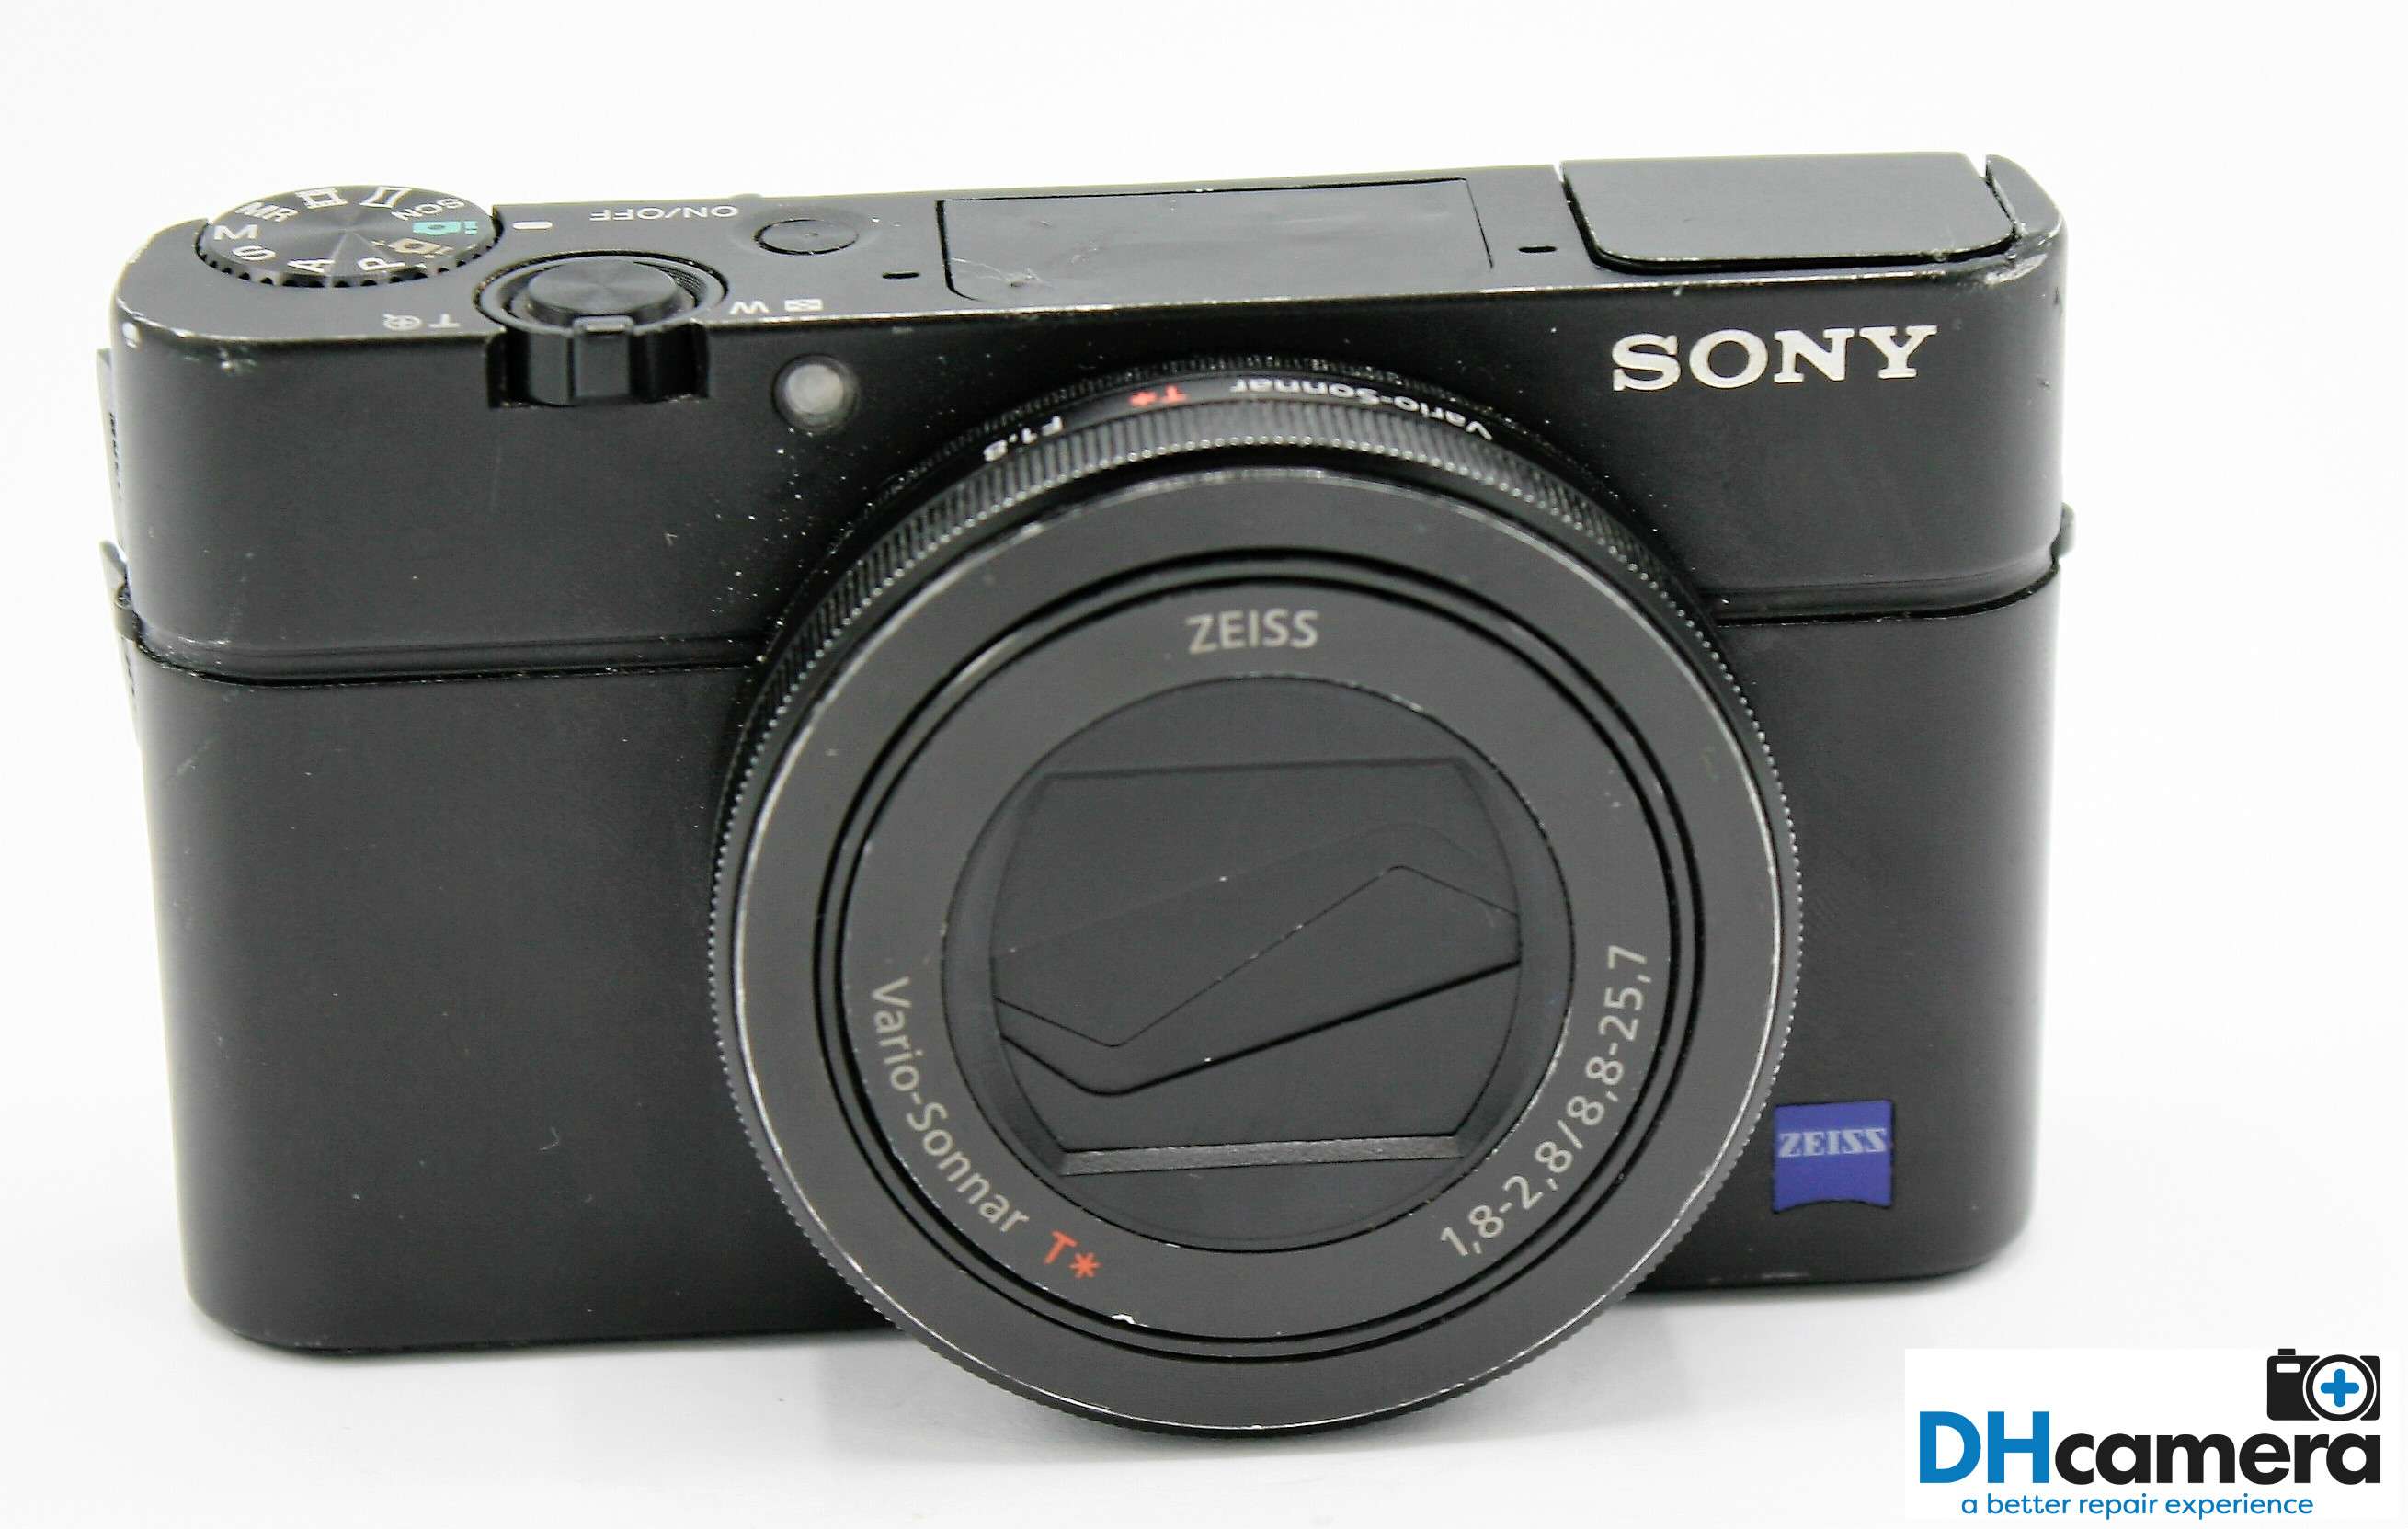 Sony Cyber-shot DSC-RX100M3/B Digital Camera RX100 III camera